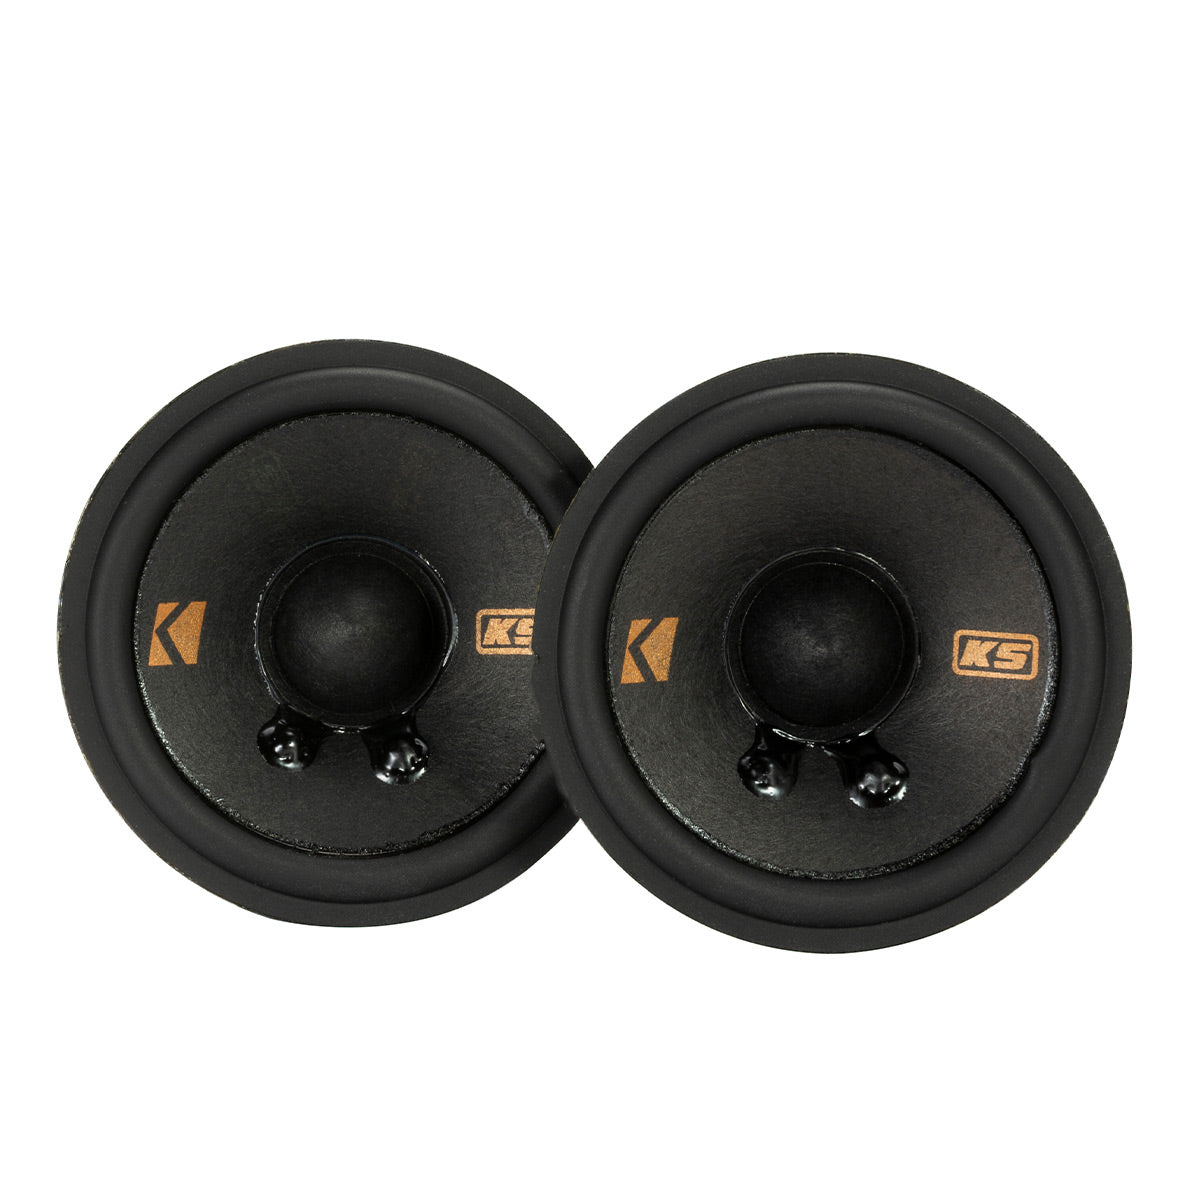 Kicker 51KSS365 6.5" KS Series 3-Way Component Speaker System